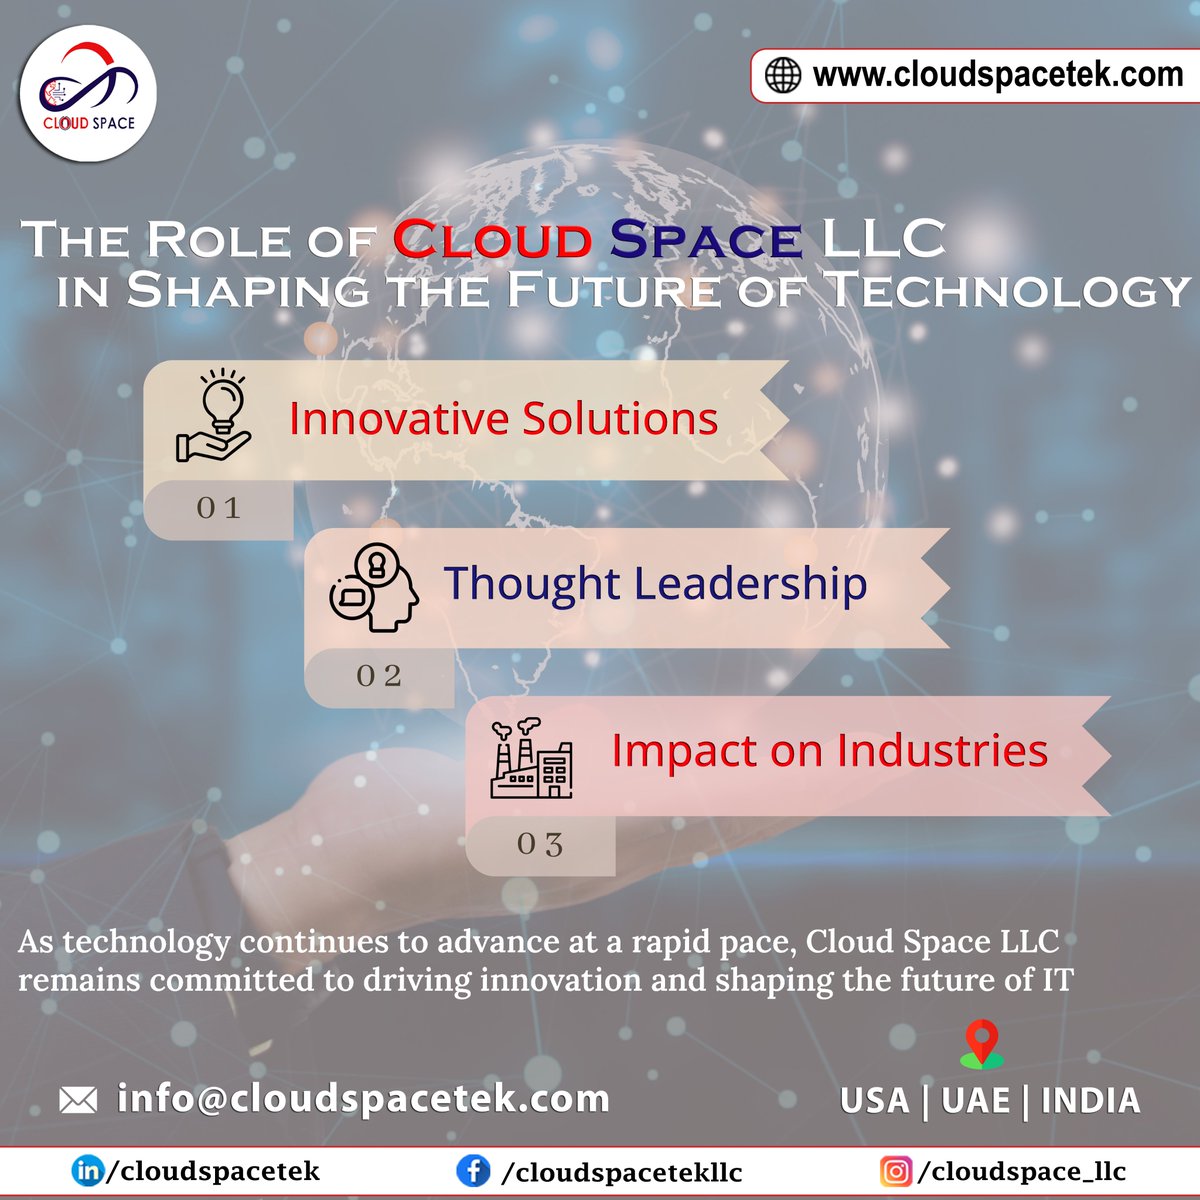 𝐓𝐡𝐞 𝐑𝐨𝐥𝐞 𝐨𝐟 𝐂𝐥𝐨𝐮𝐝 𝐒𝐩𝐚𝐜𝐞 𝐋𝐋𝐂 𝐢𝐧 𝐒𝐡𝐚𝐩𝐢𝐧𝐠 𝐭𝐡𝐞 𝐅𝐮𝐭𝐮𝐫𝐞 𝐨𝐟 𝐓𝐞𝐜𝐡𝐧𝐨𝐥𝐨𝐠𝐲 #CloudSpaceLLC #TechnologyInnovation #ITIndustry #DigitalTransformation #ThoughtLeadership #InnovativeSolutions #FutureofTechnology #TechLeaders #ITConsulting